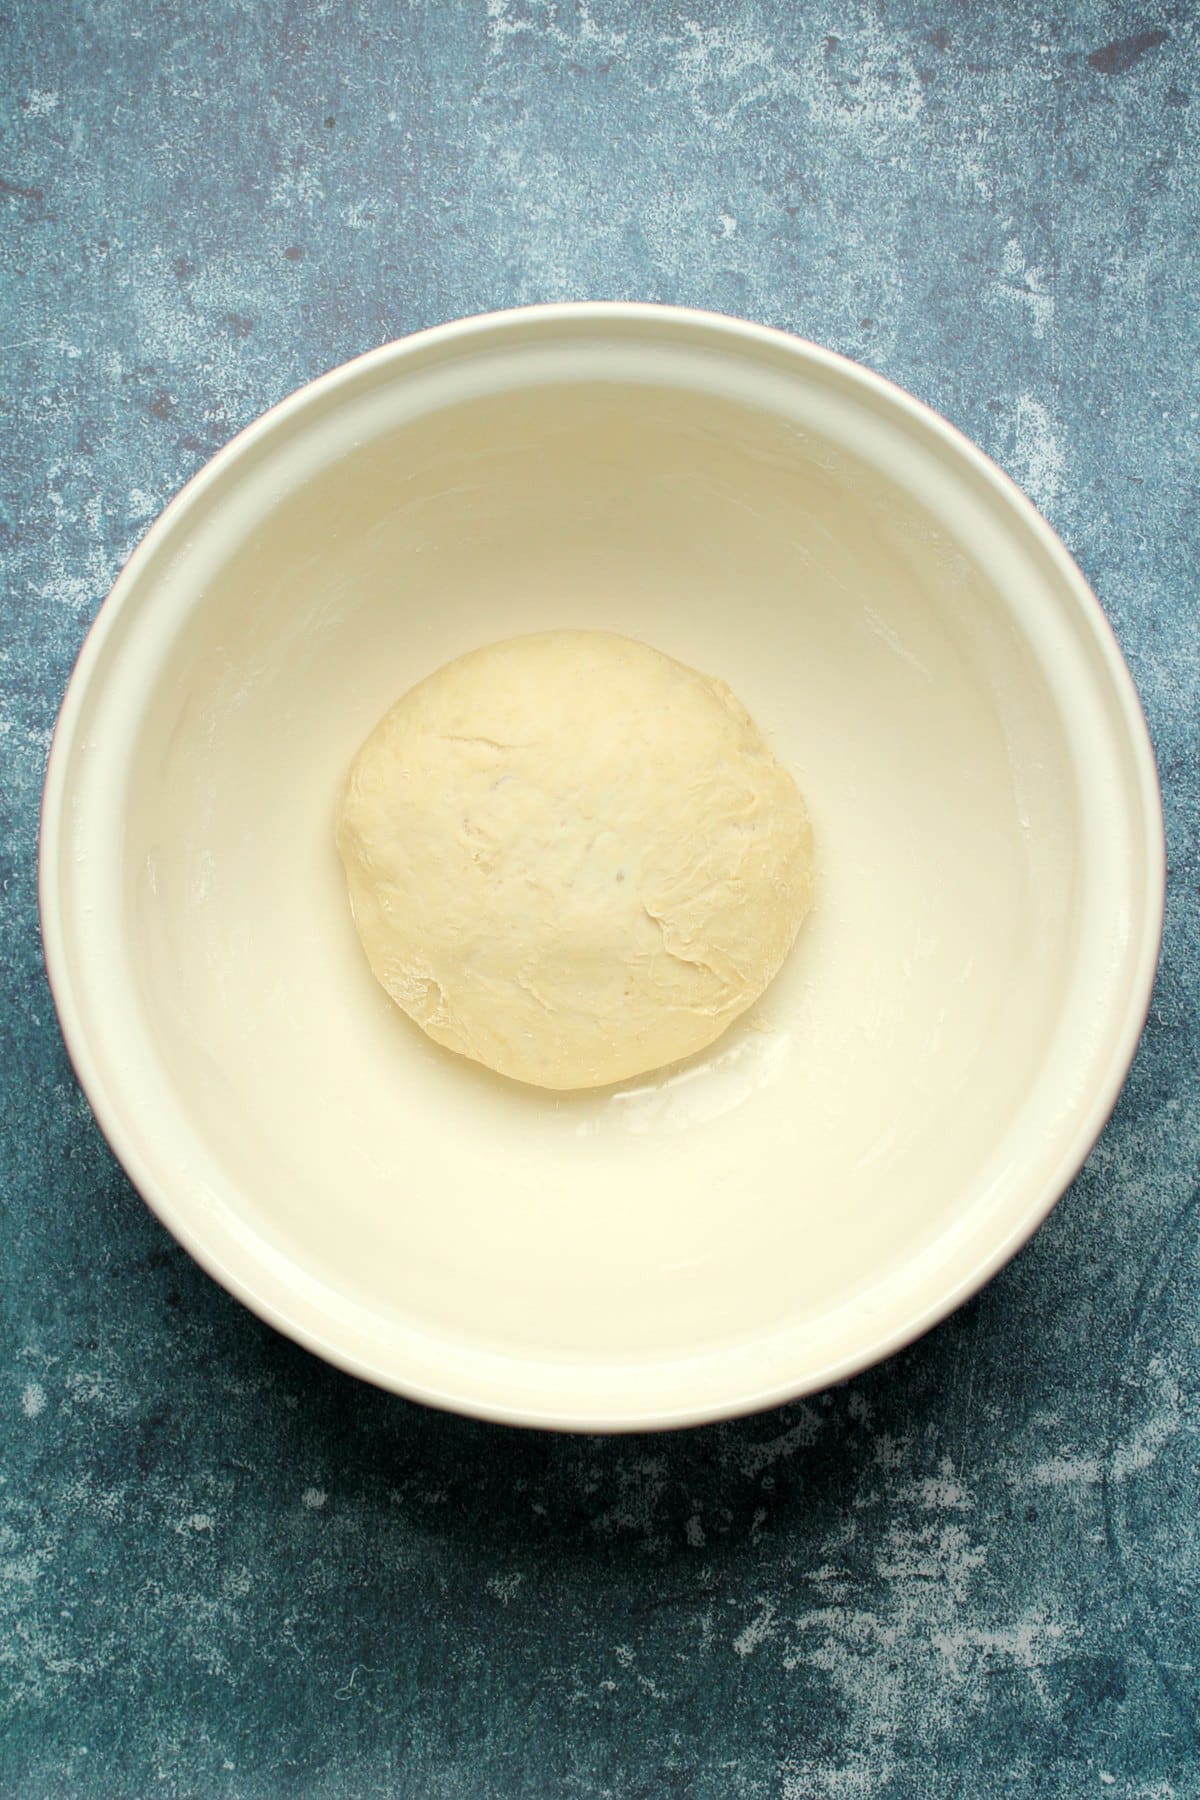 Risen ball of dough in a bowl.